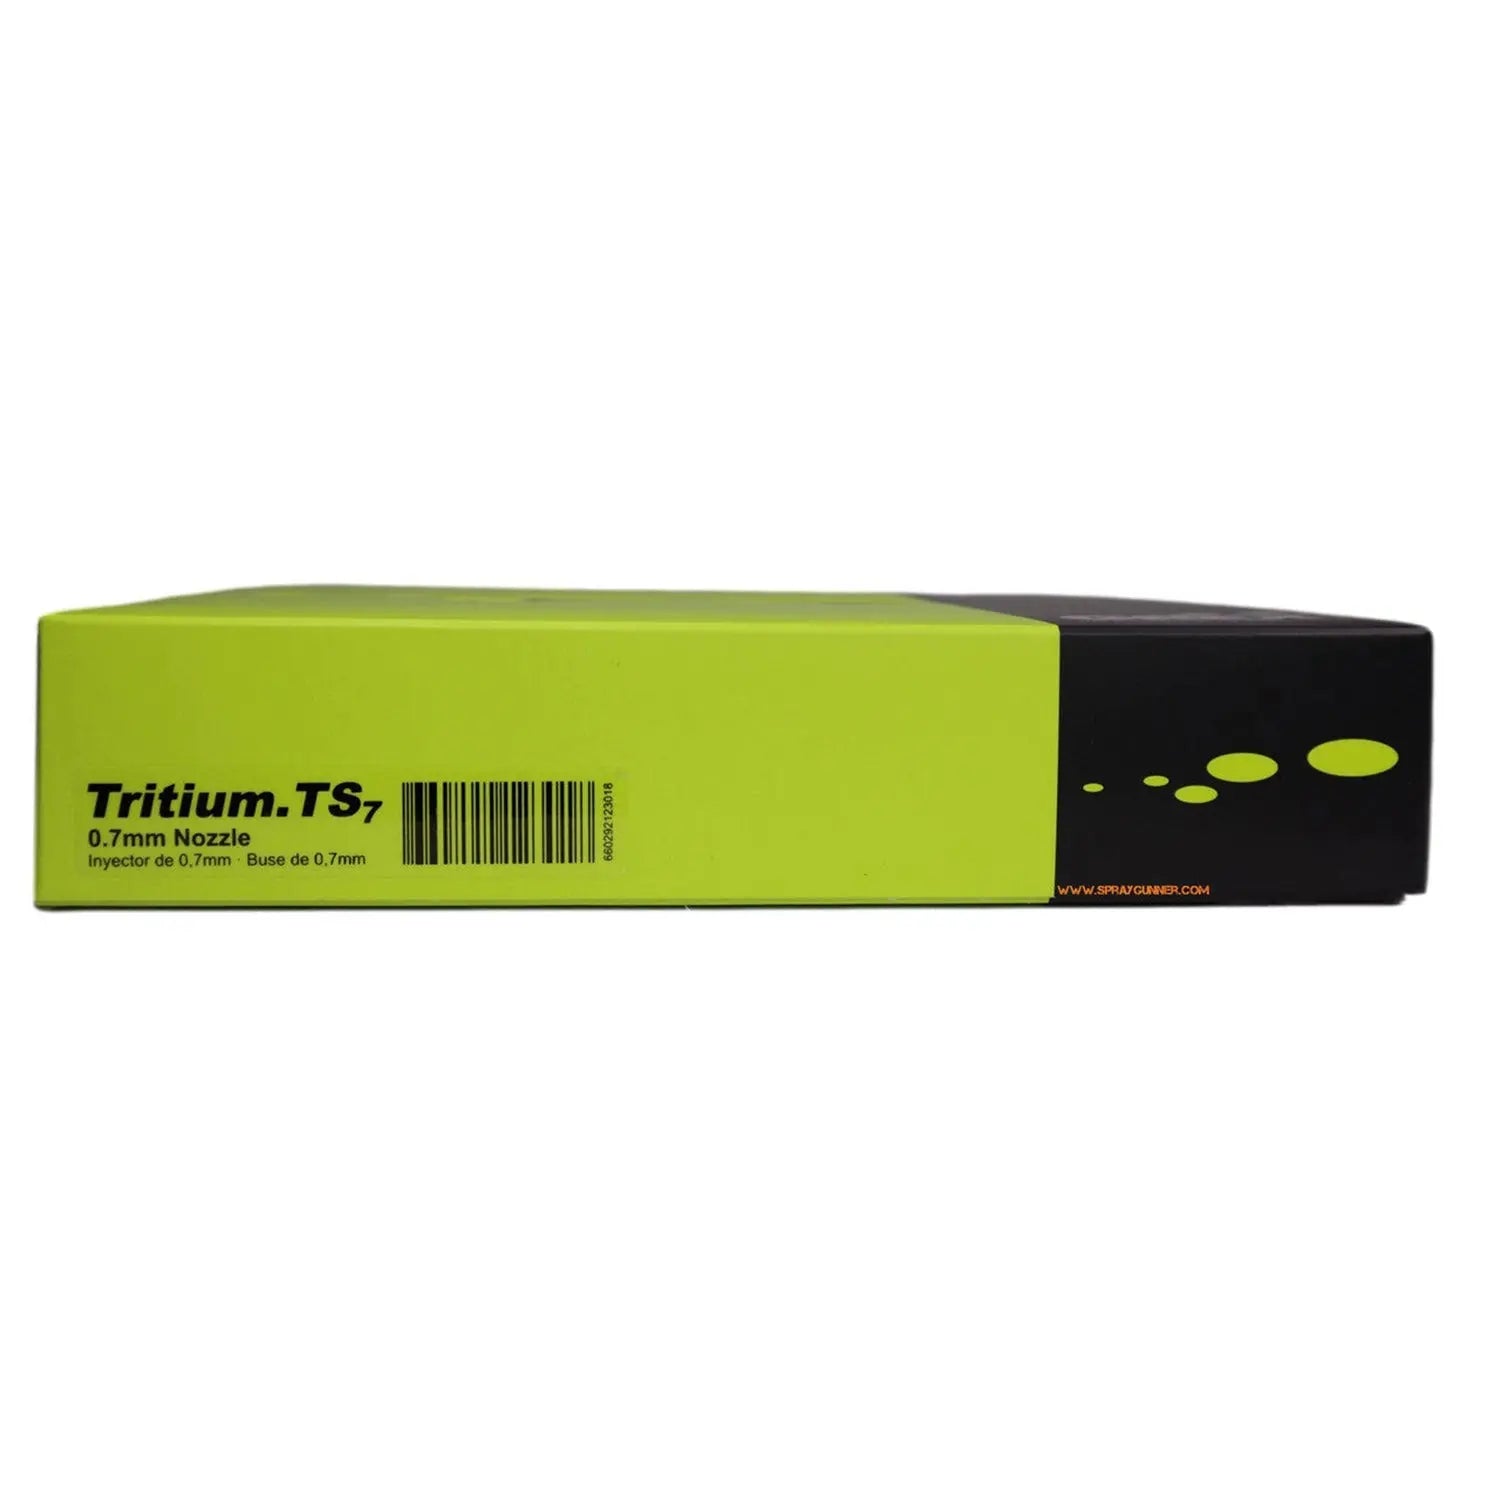 Grex Tritium.TS7 Grex Airbrush